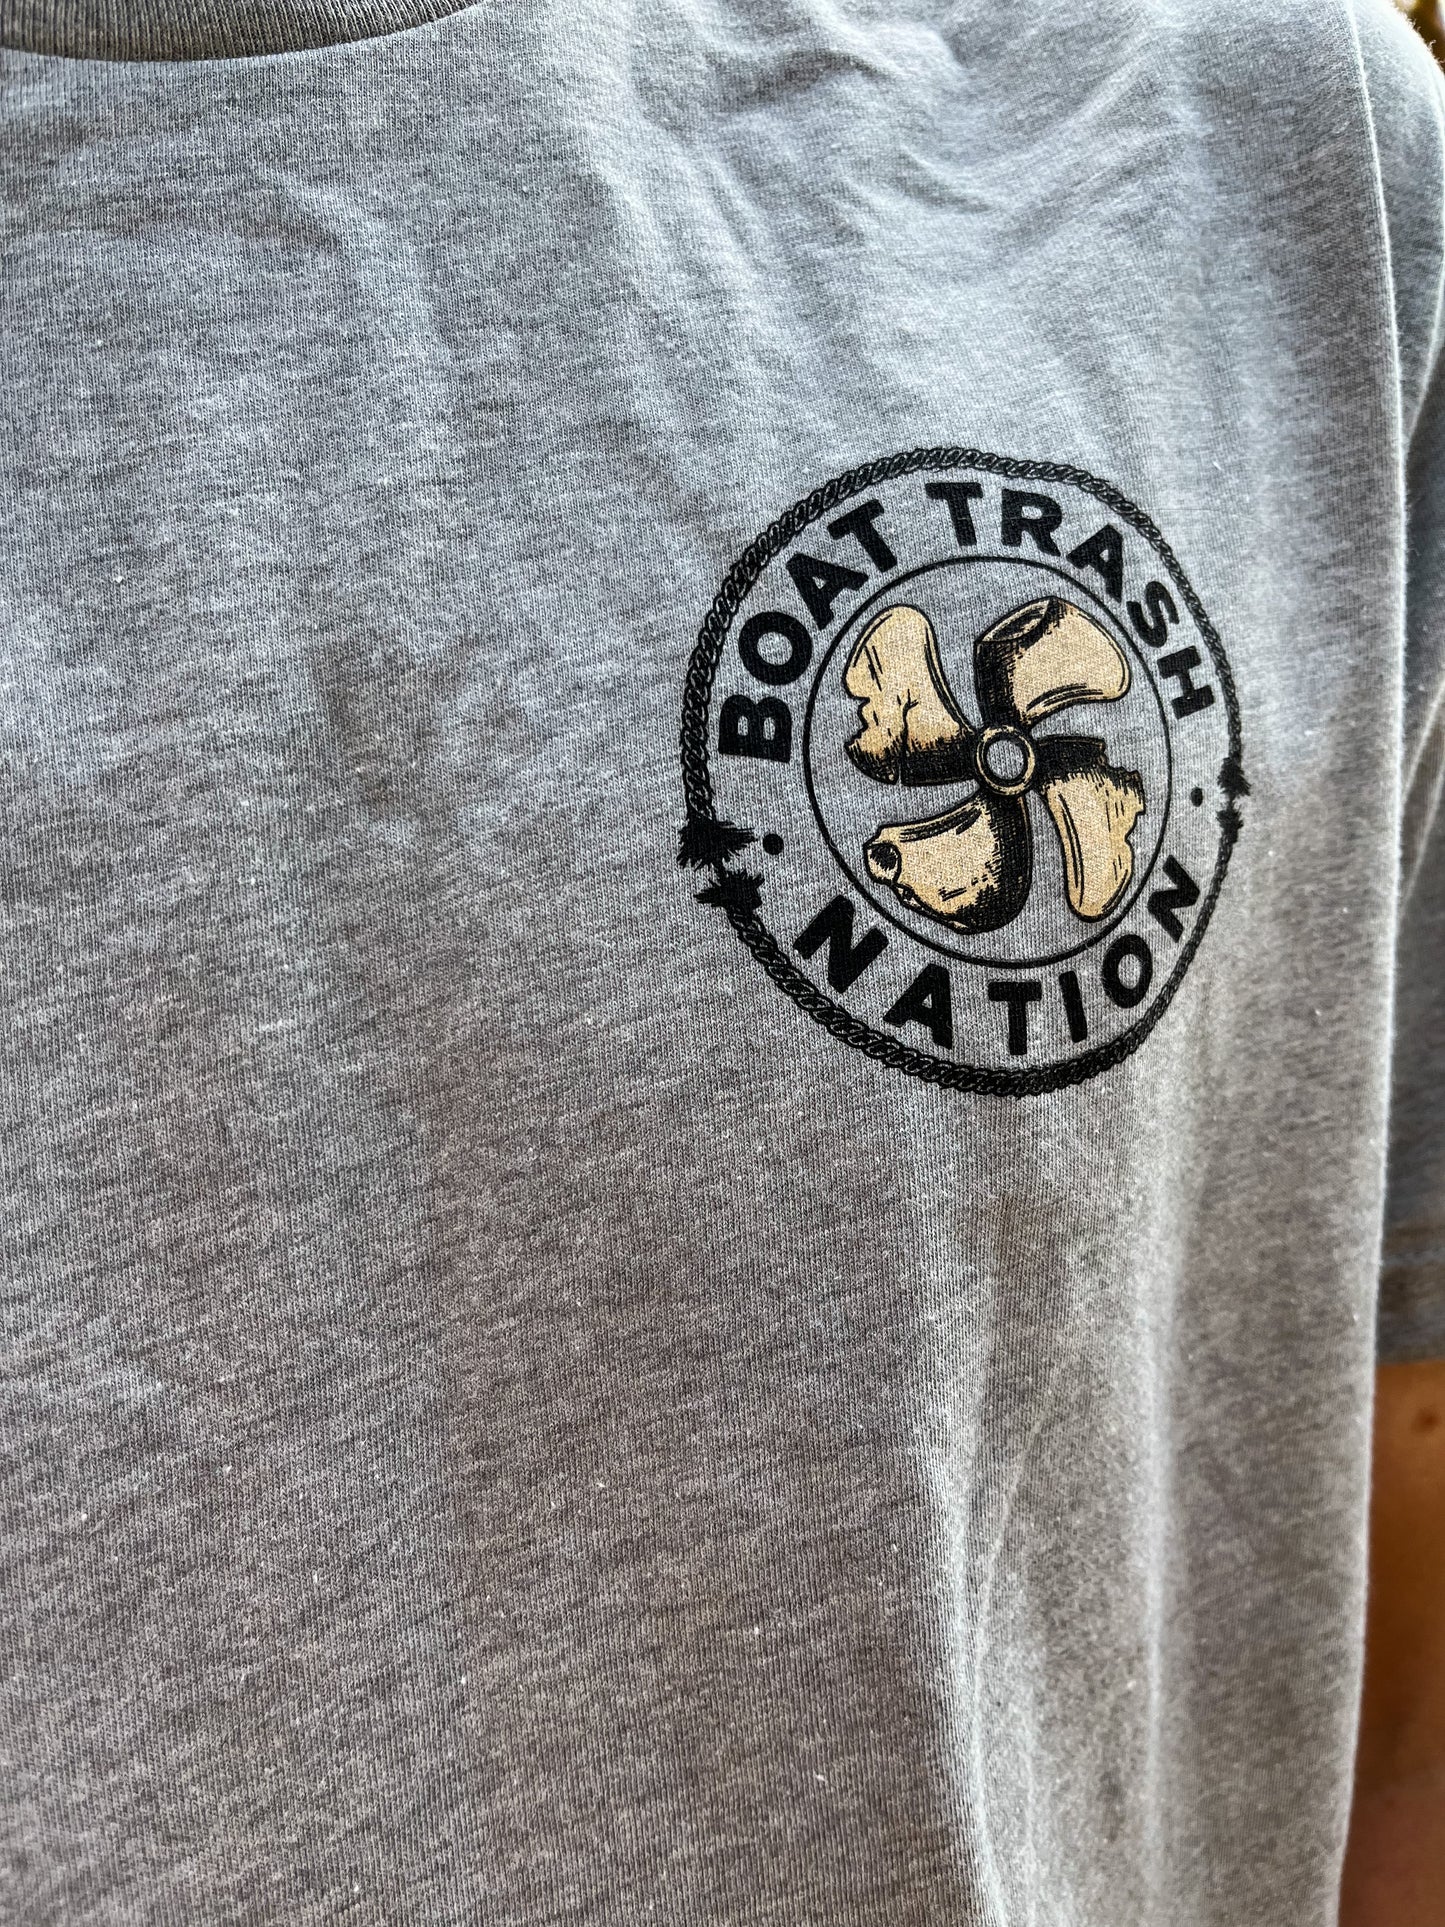 Boat Trash Nation Logo Shirt - (New) Short Sleeve